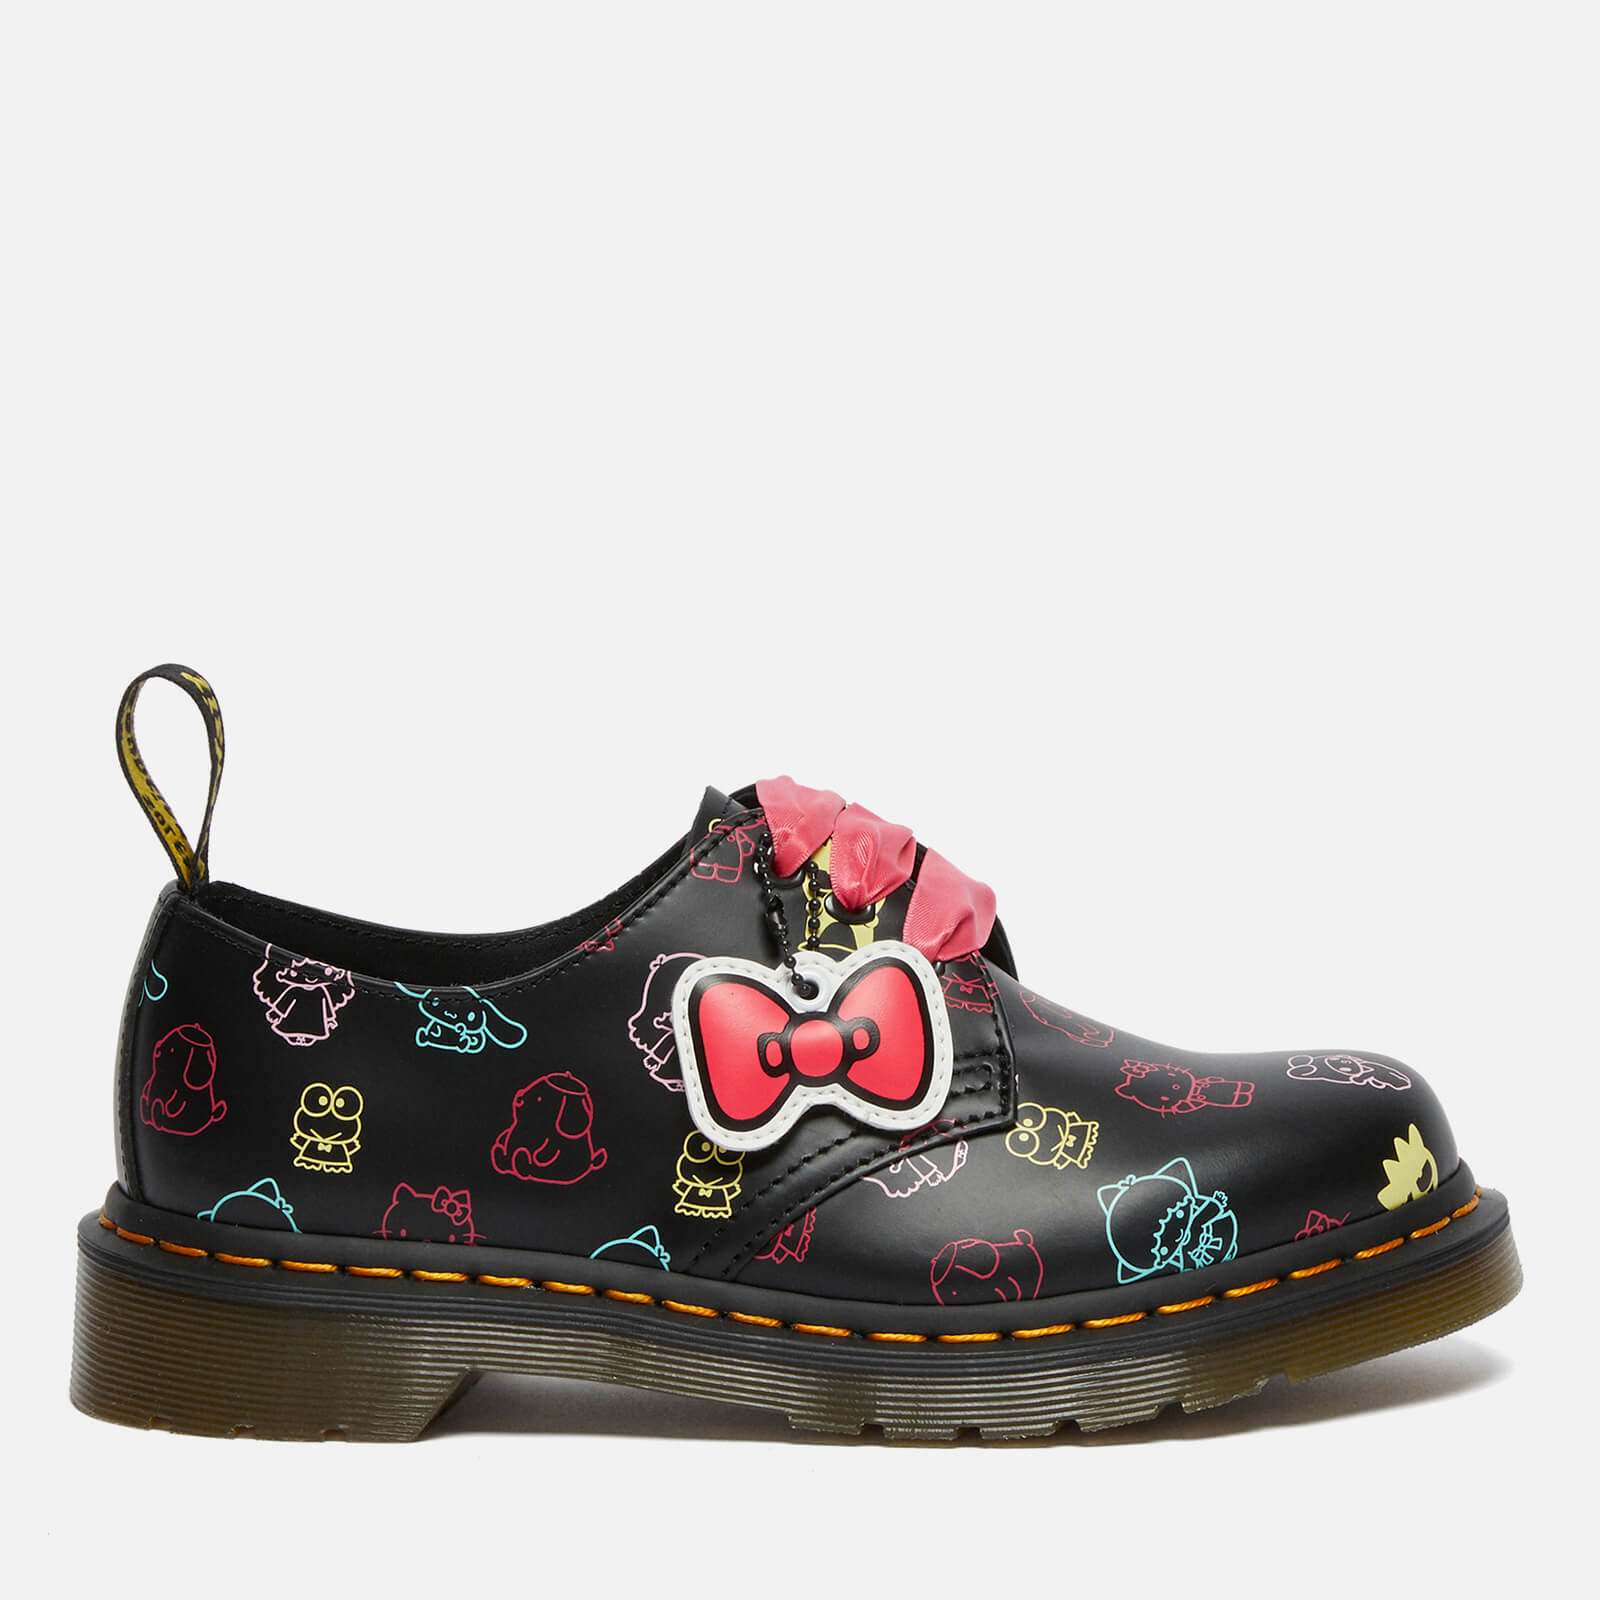 Dr. Martens X Hello Kitty Women's 1461 Leather 3-Eye Shoes - Black - UK 3